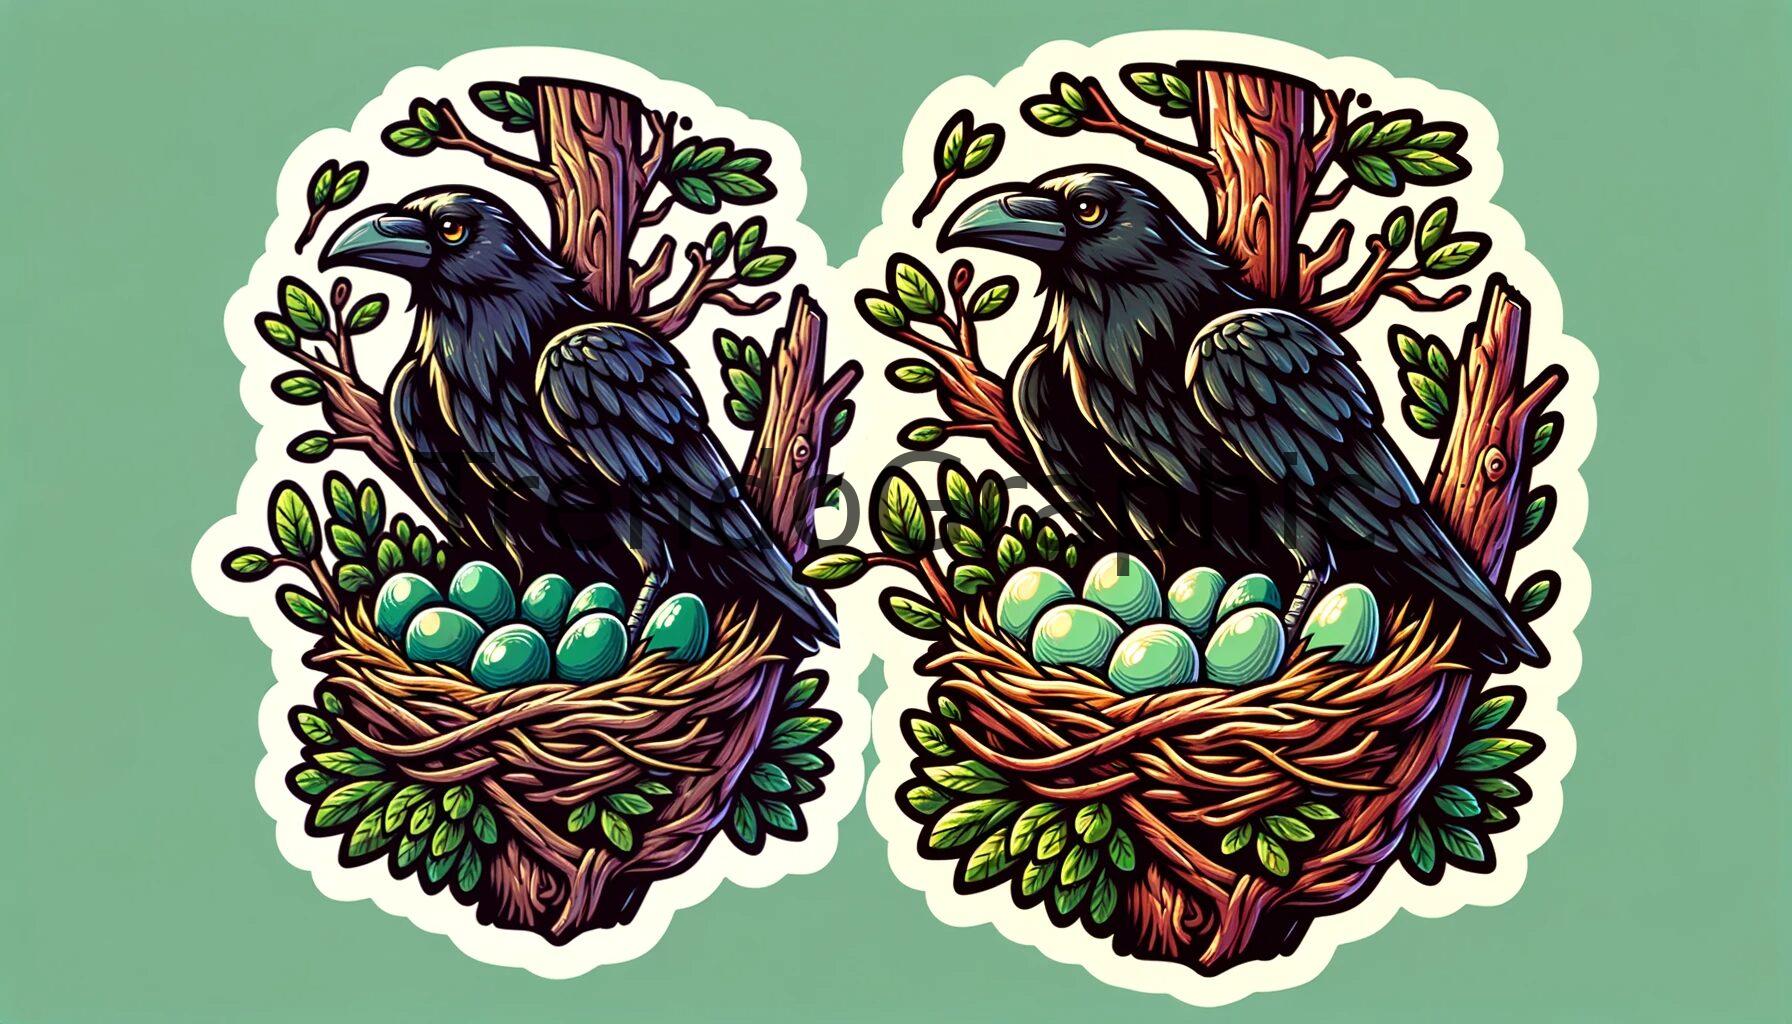 Nest Watcher: Crow’s Vigil in the Trees